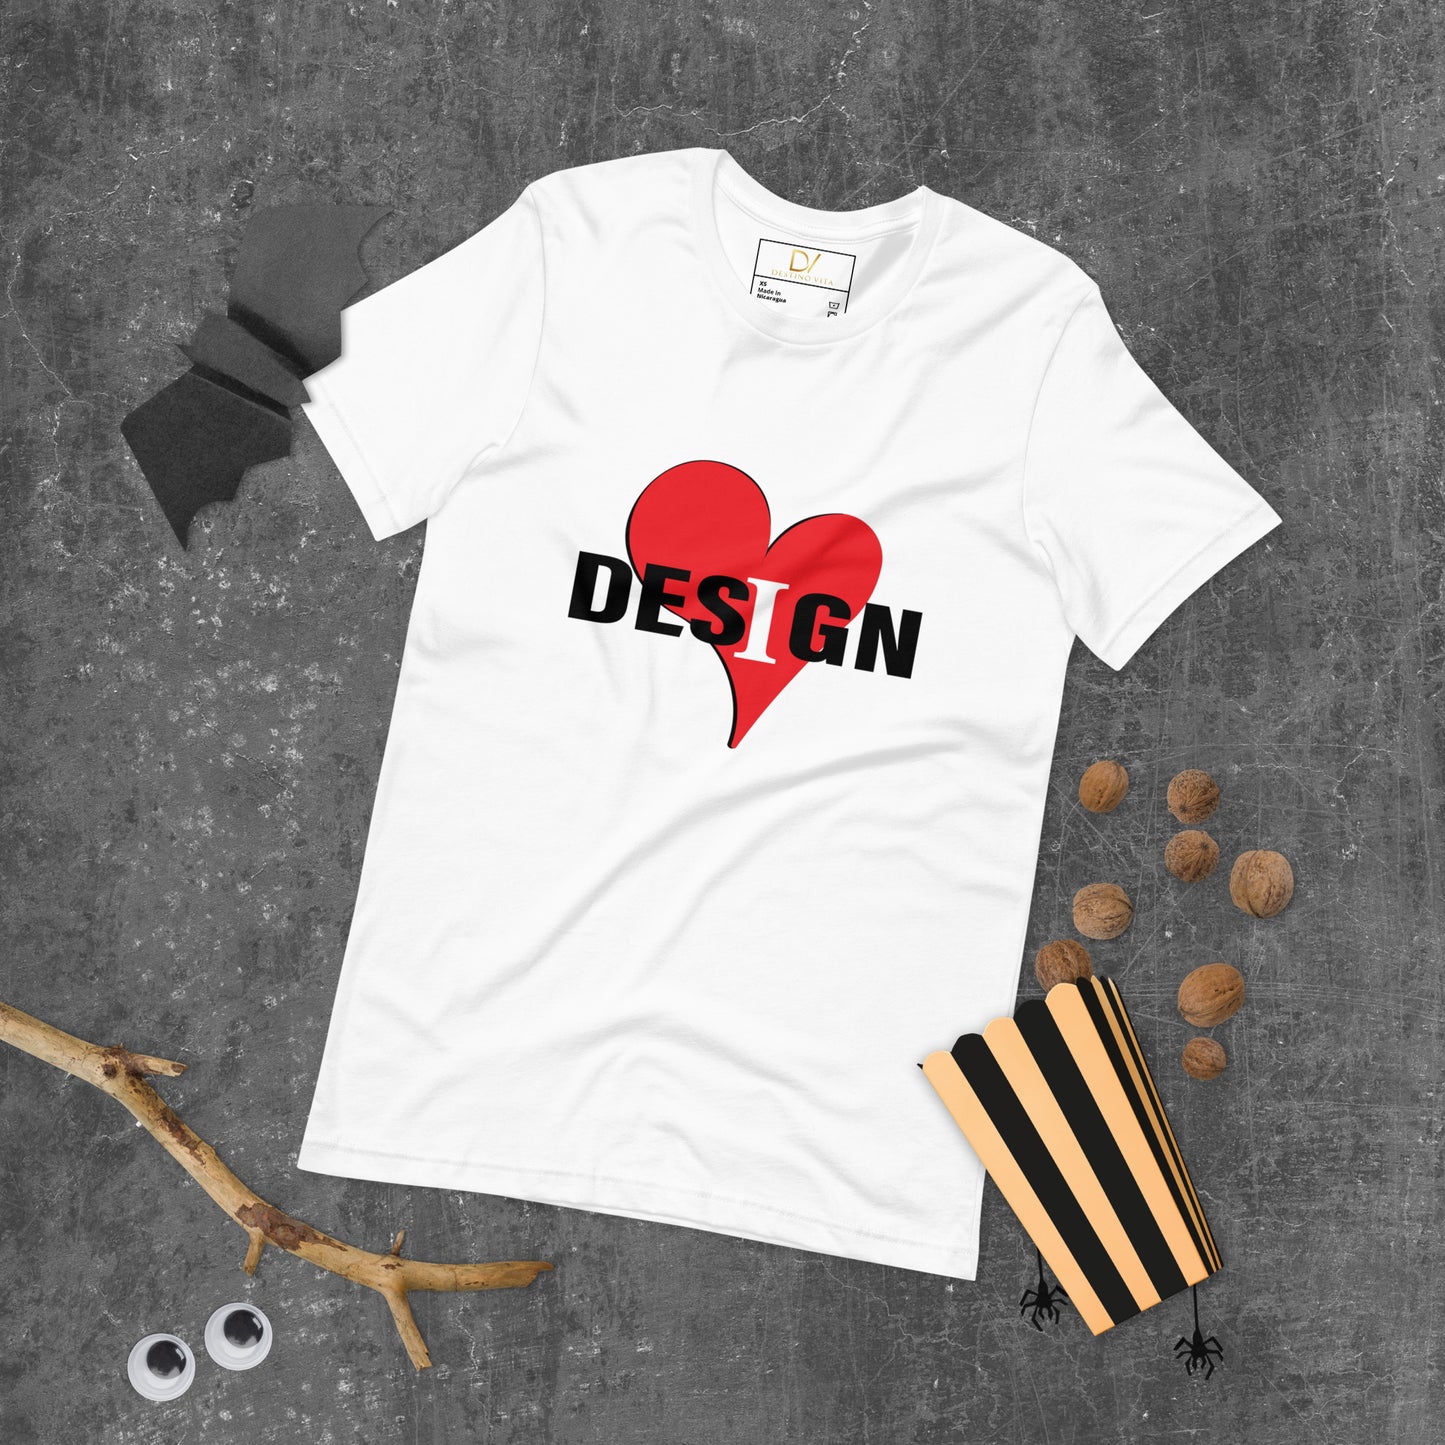 Unisex t-shirt - Design